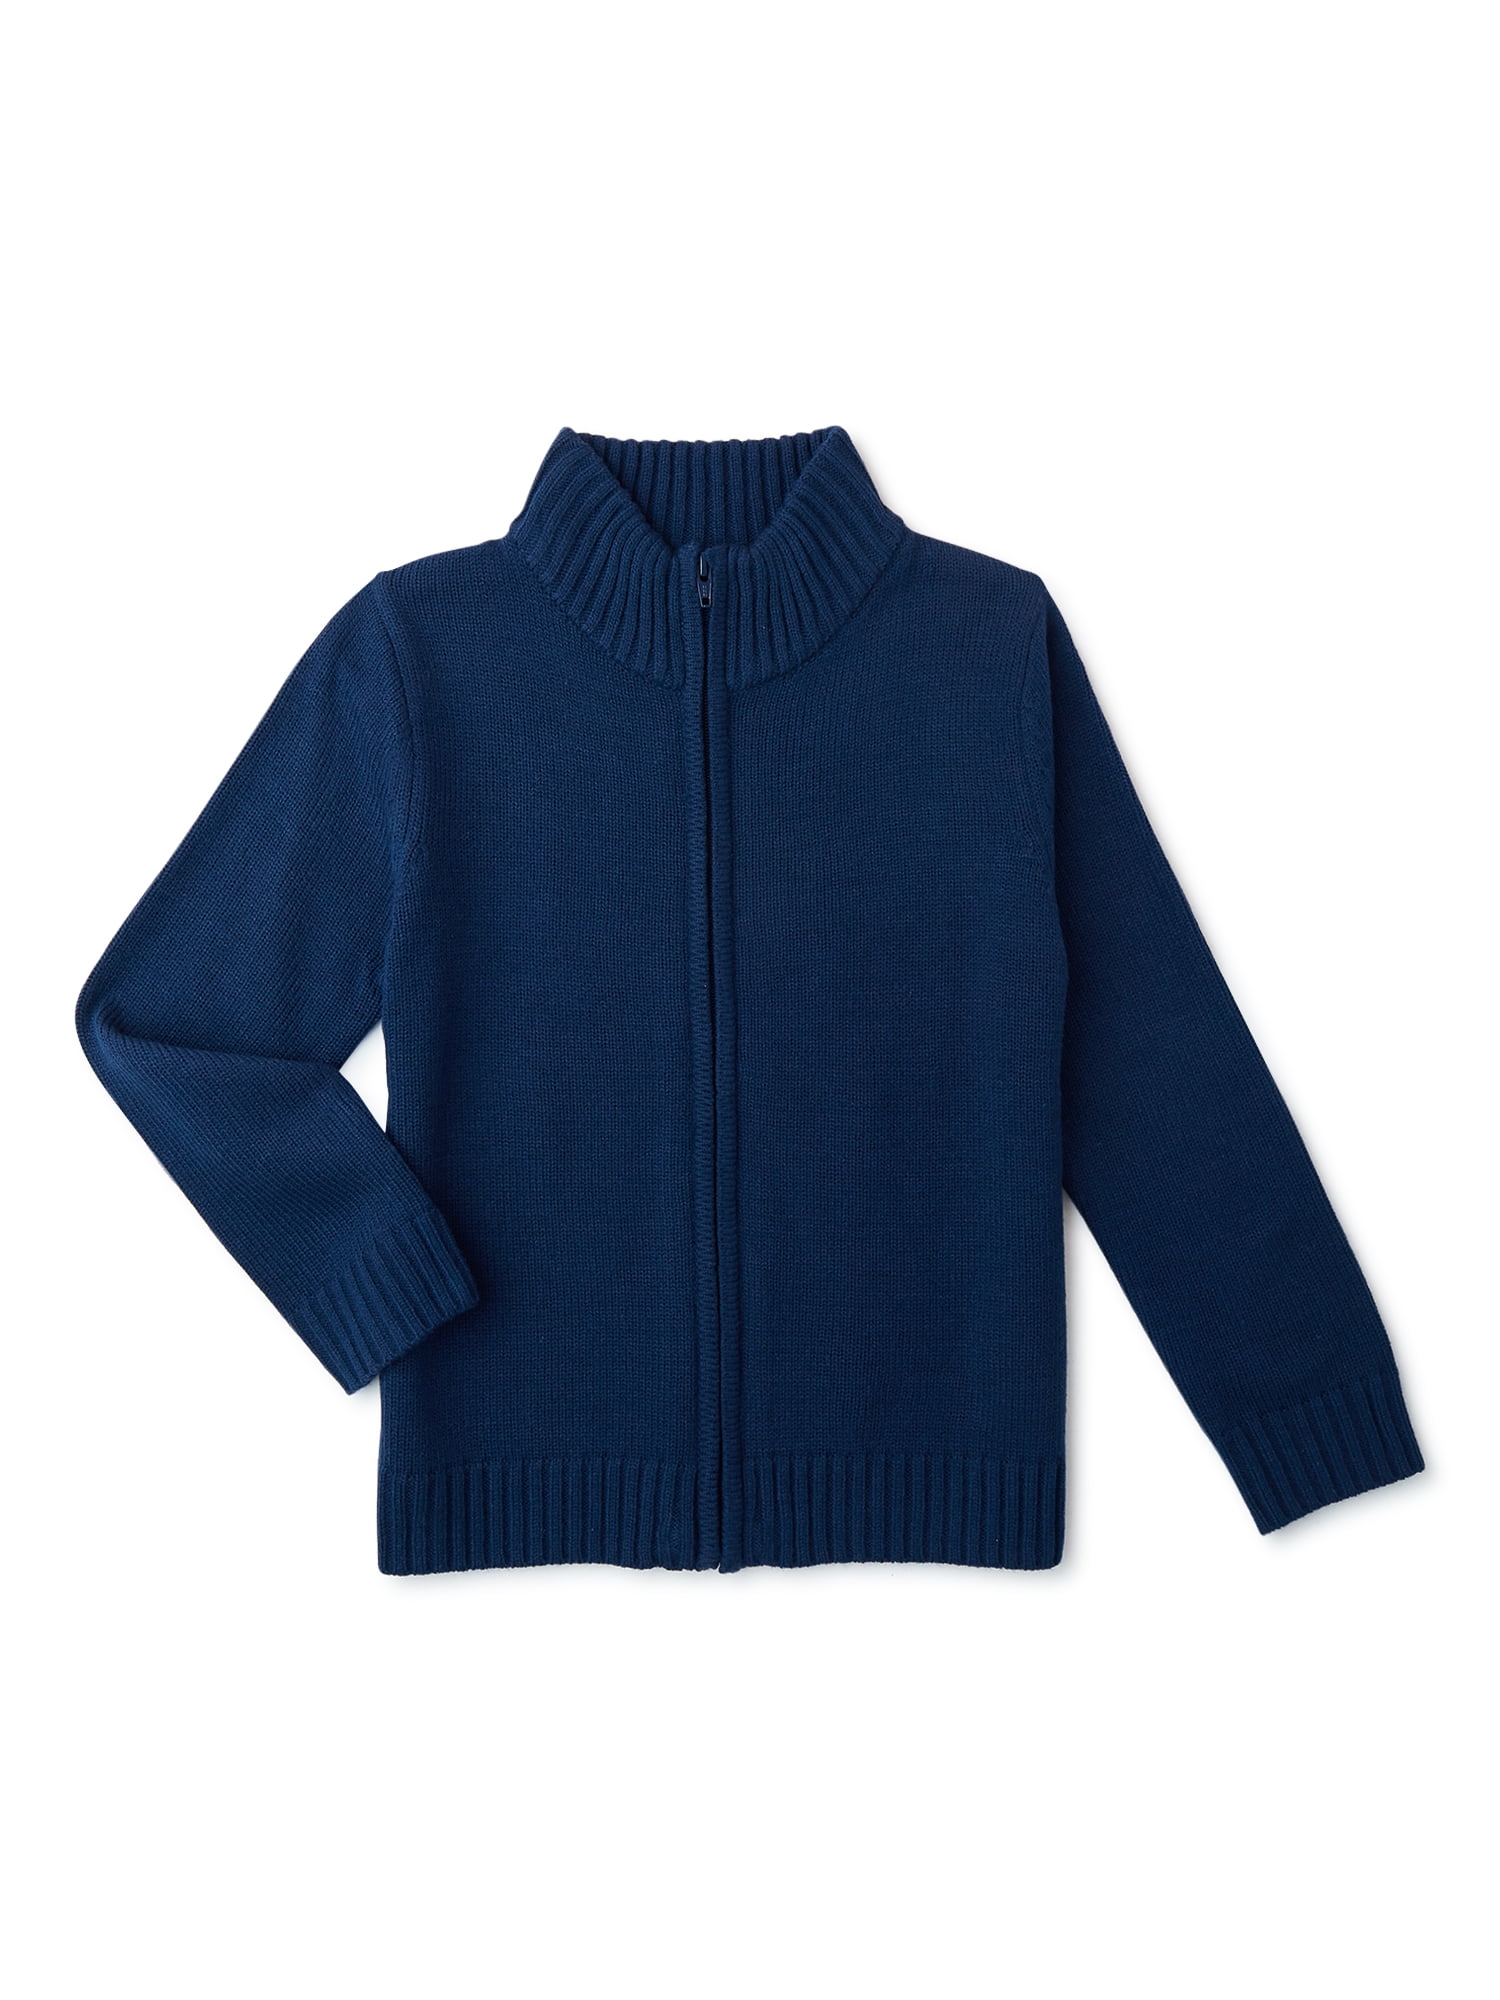 Wonder Nation Boys School Uniform Zip Up Sweater, Sizes 4-18 - Walmart.com